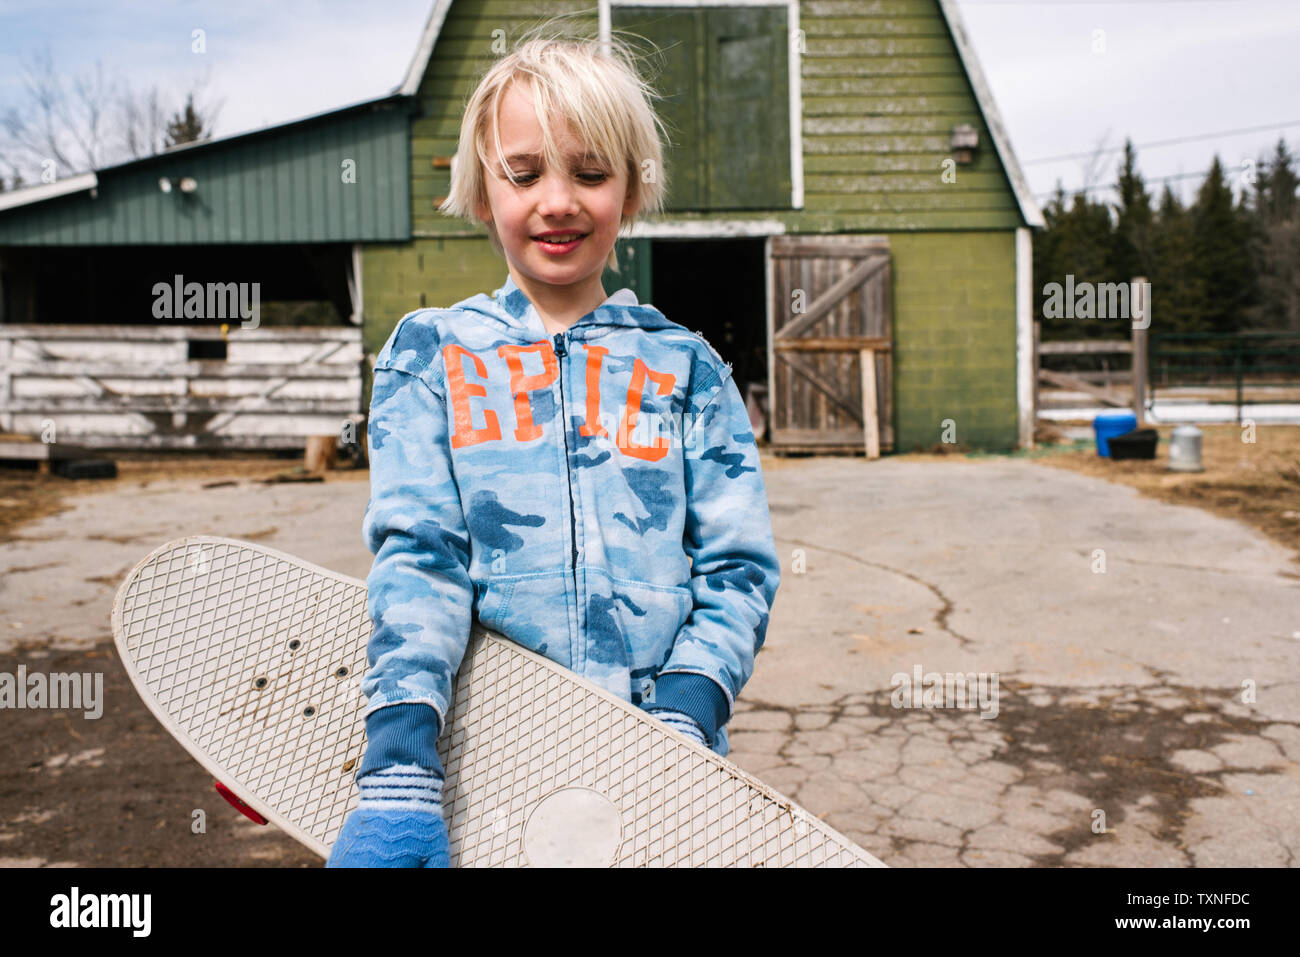 Blonde Junge mit Skateboard in Hof, Porträt Stockfoto